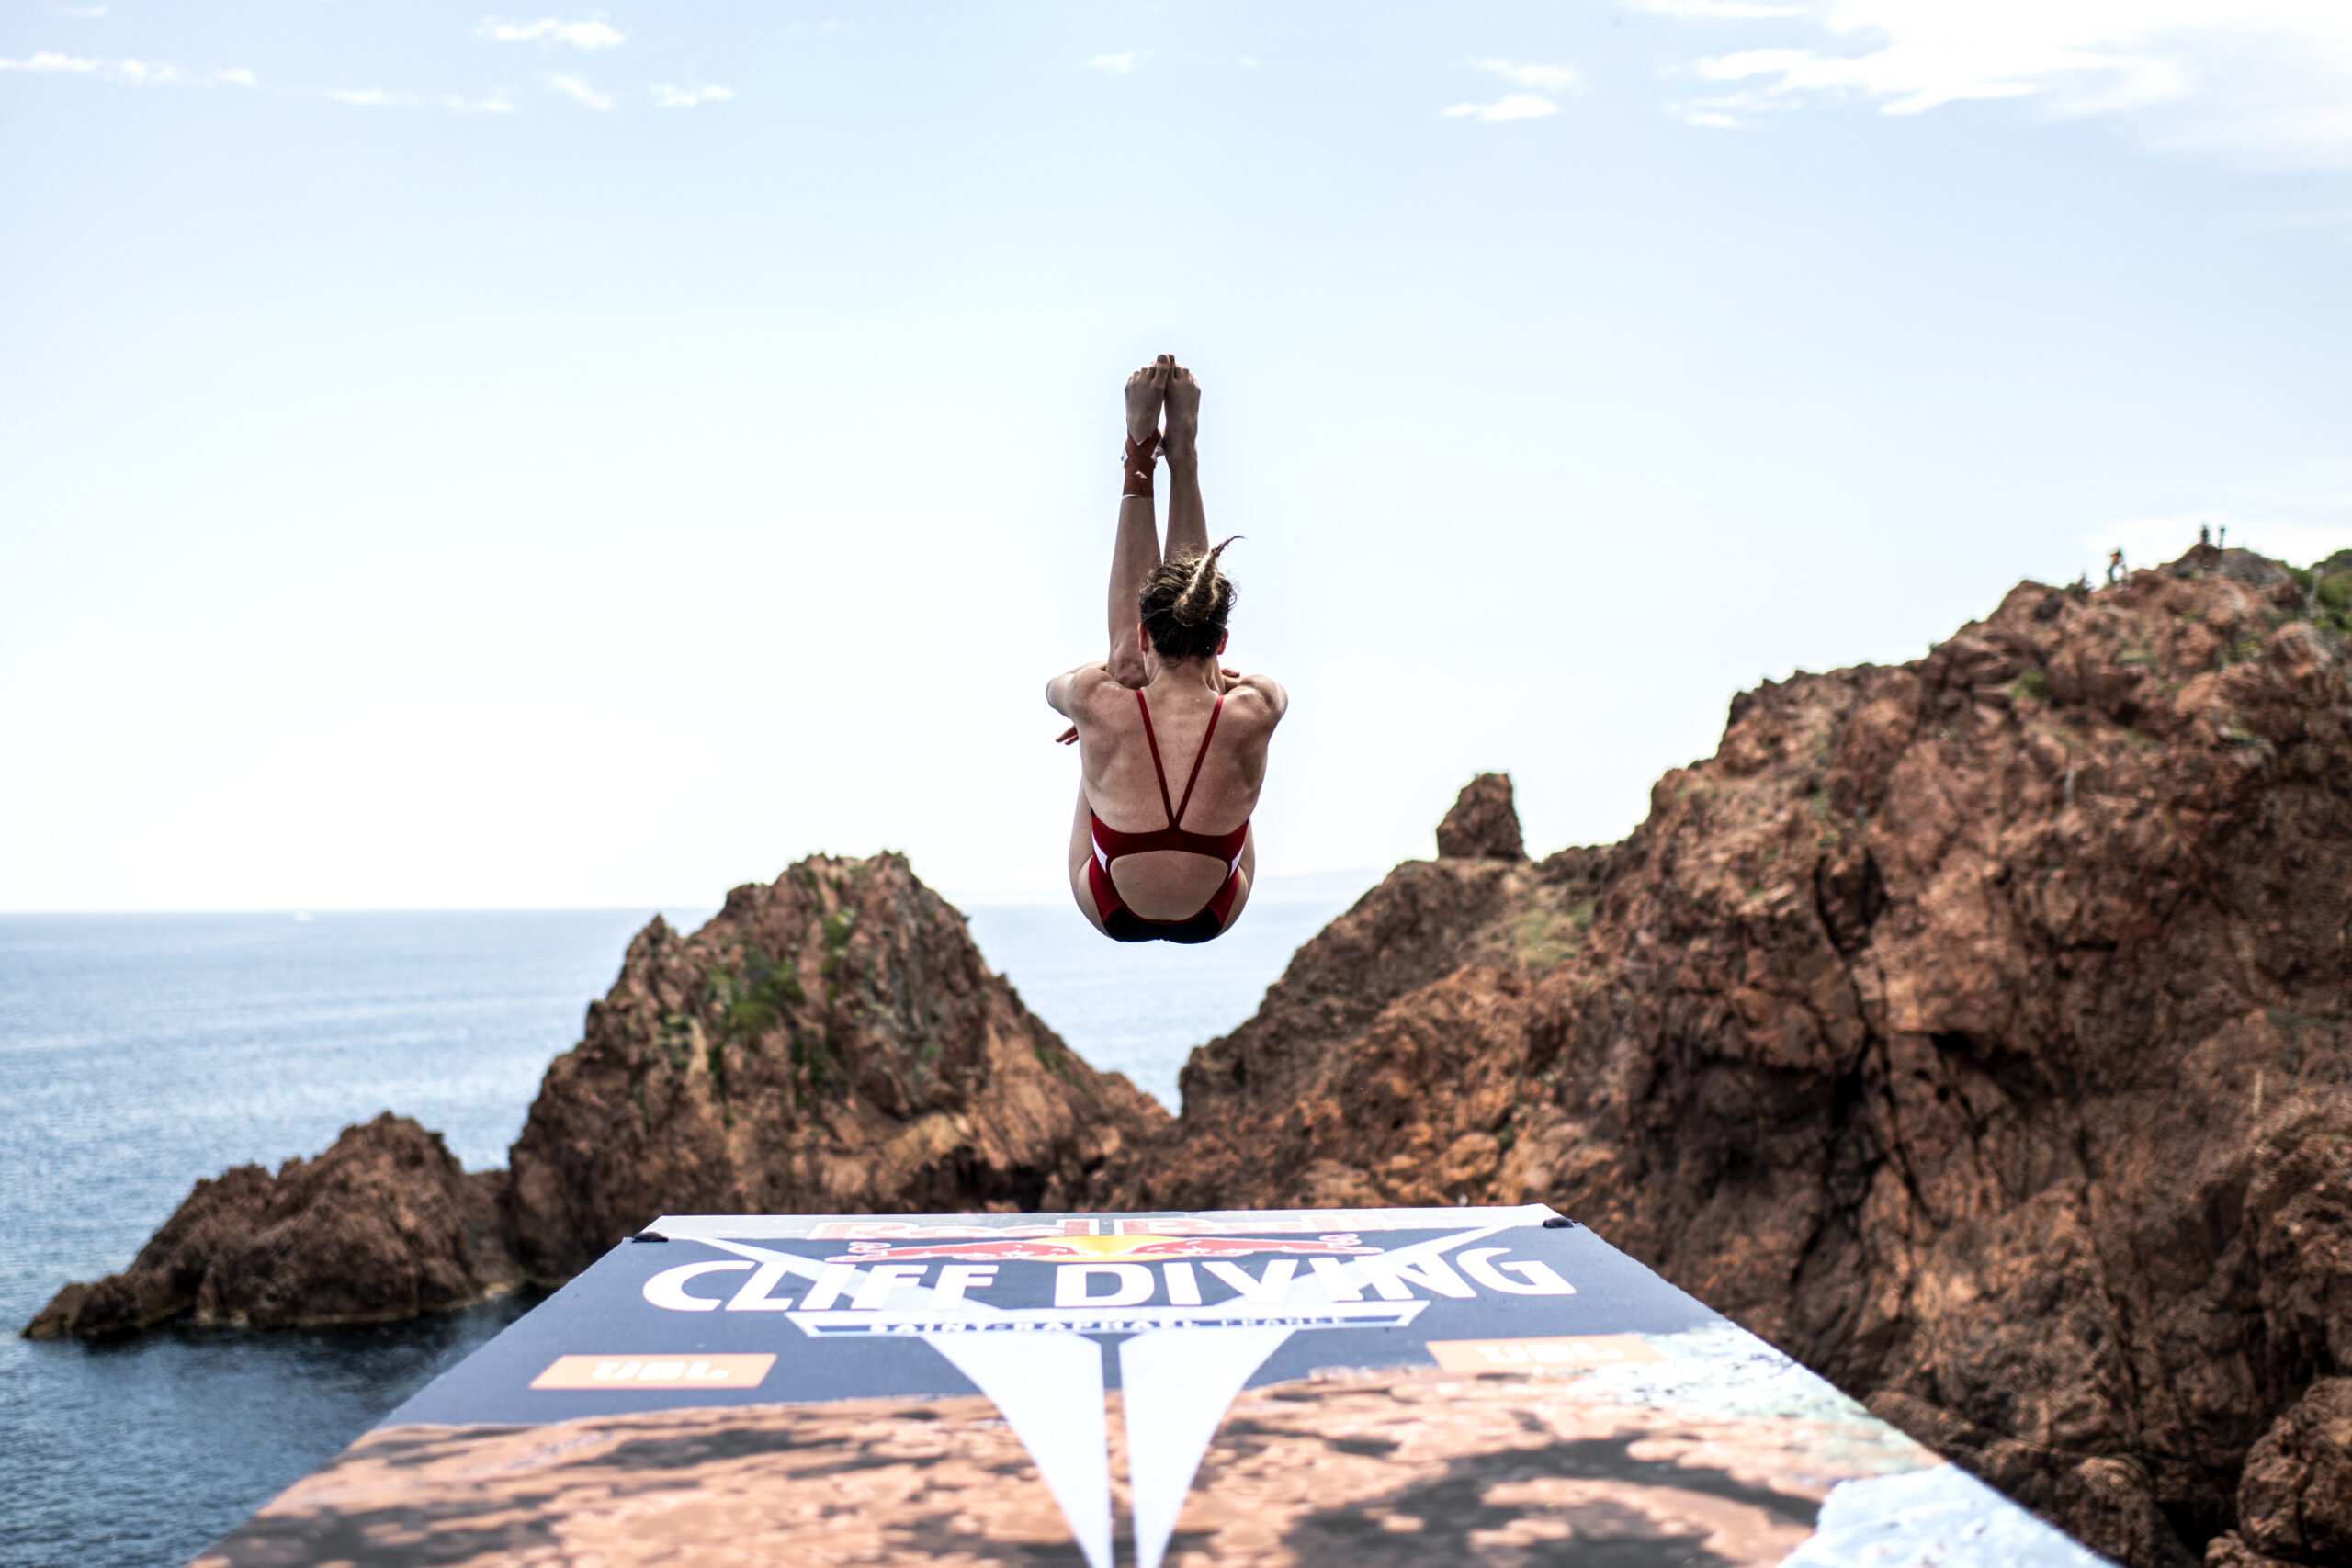 Red Bull Cliff Diving World Series Saint-Raphaël, France – Day 2